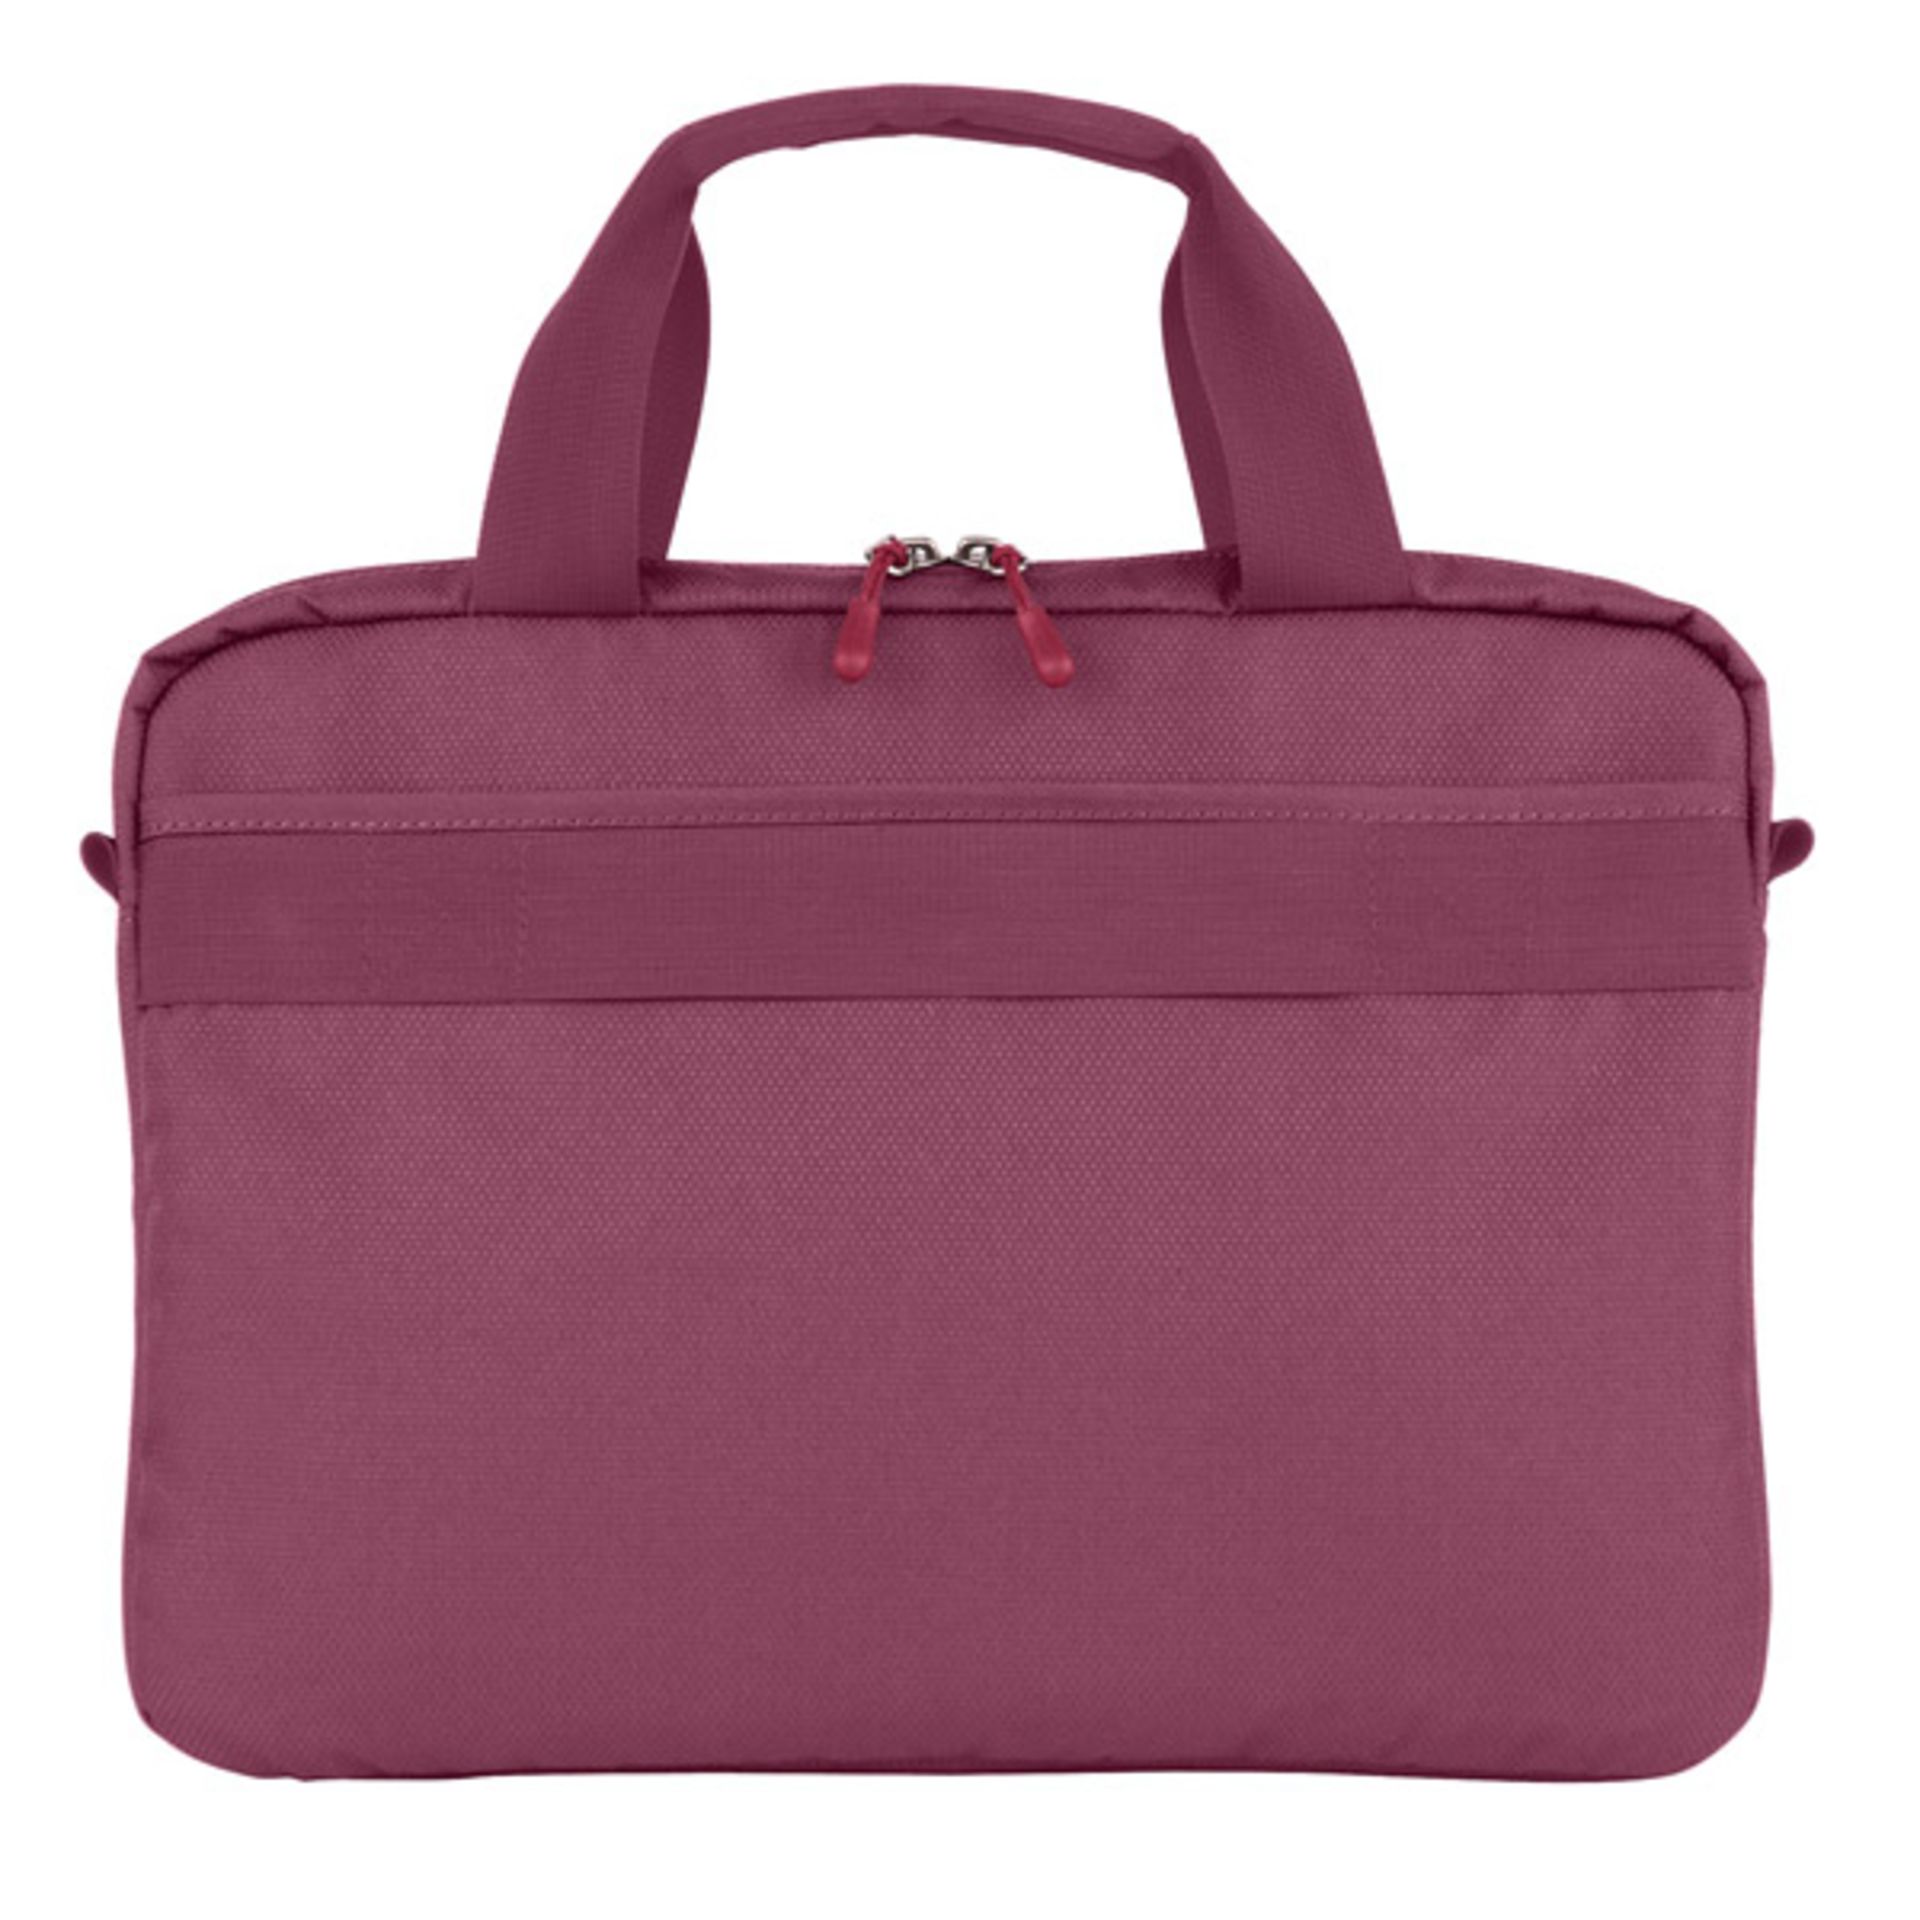 V Brand New STM Swift Medium Shoulder Bag - RRP £42.99 Amazon Price £33.57 - For Laptop/Tablet Up To - Image 3 of 3